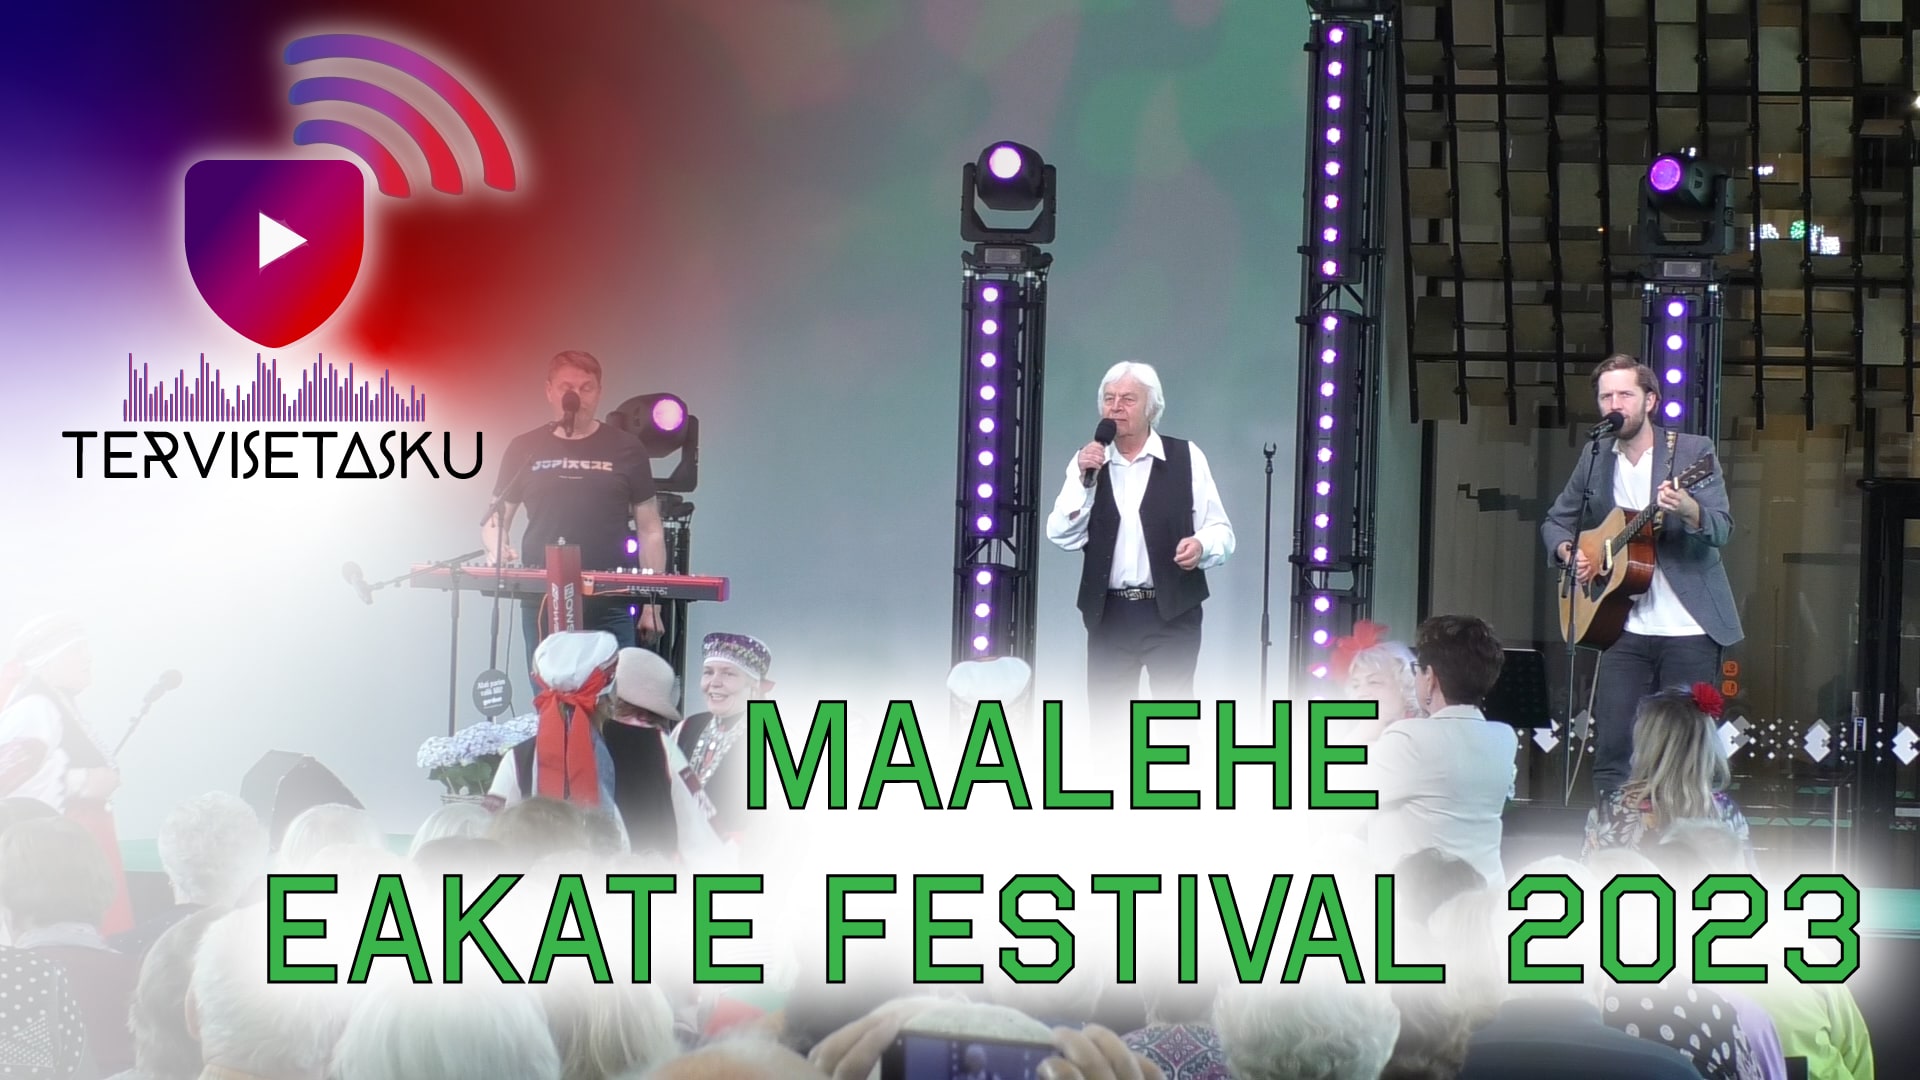 TerviseTasku Maalehe Eakate Festival 2023 reportaaž